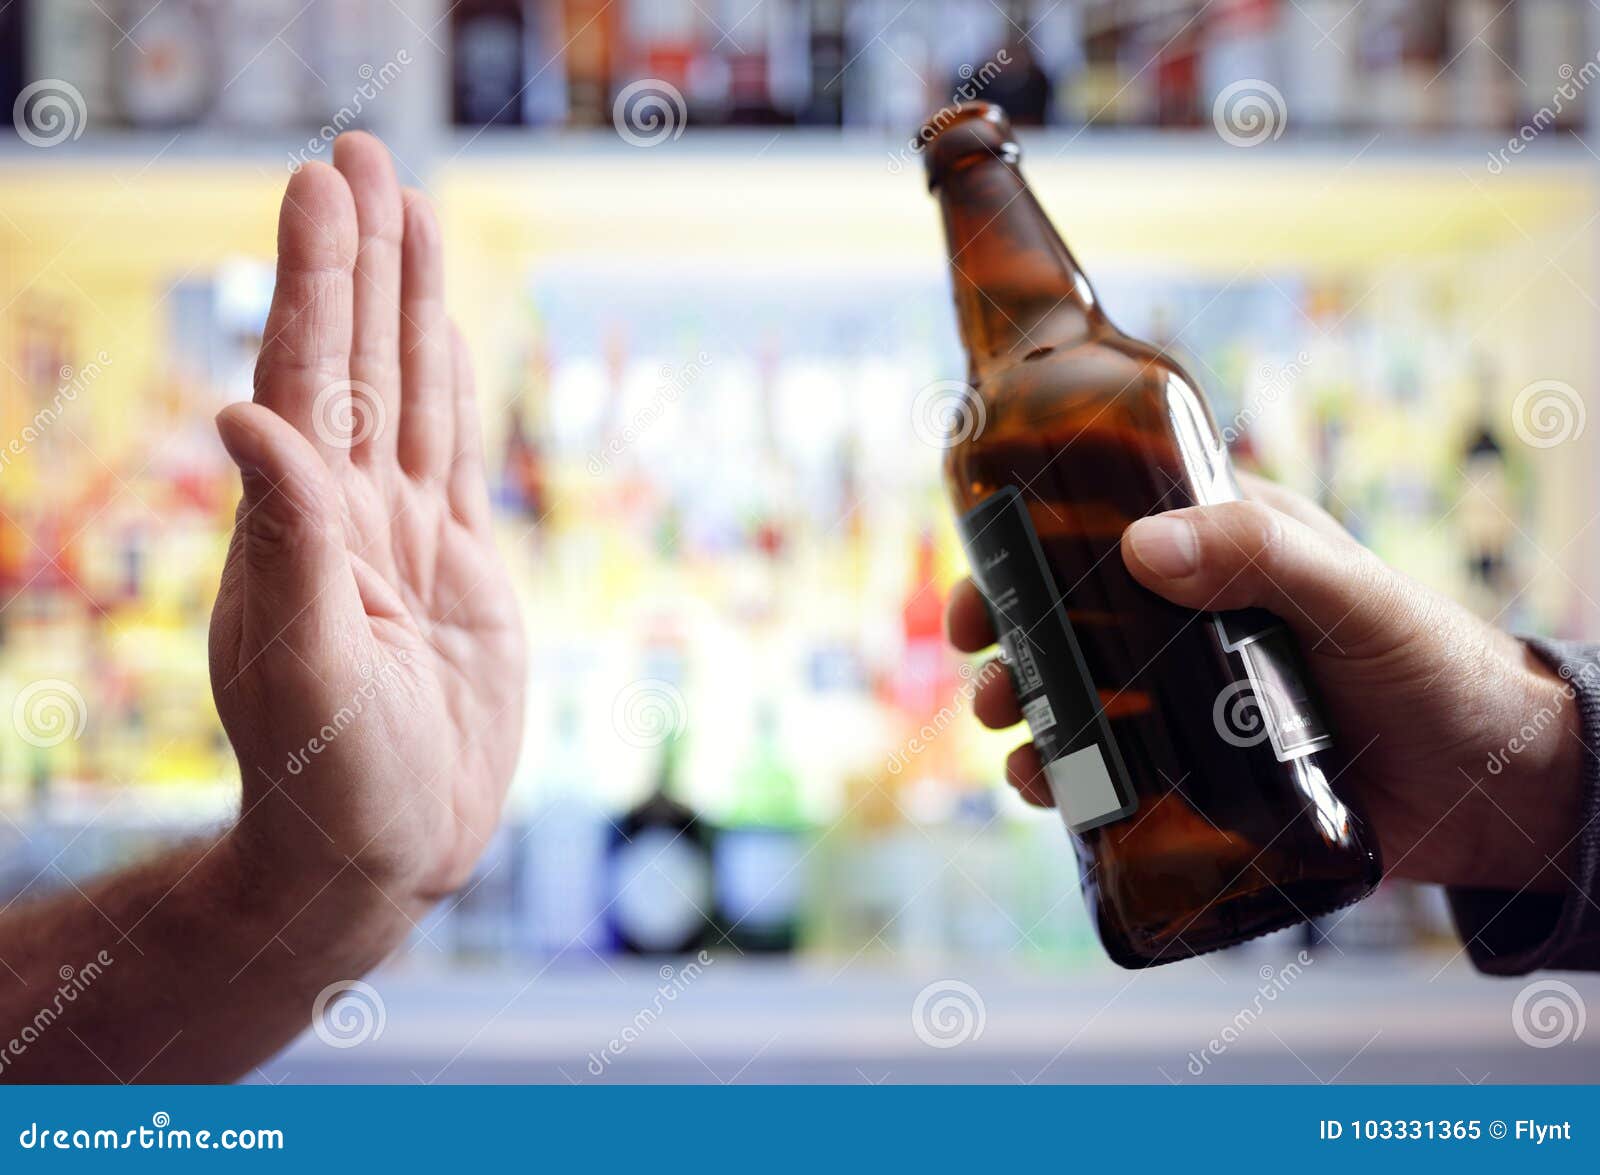 Hand rejecting alcoholic beer beverage